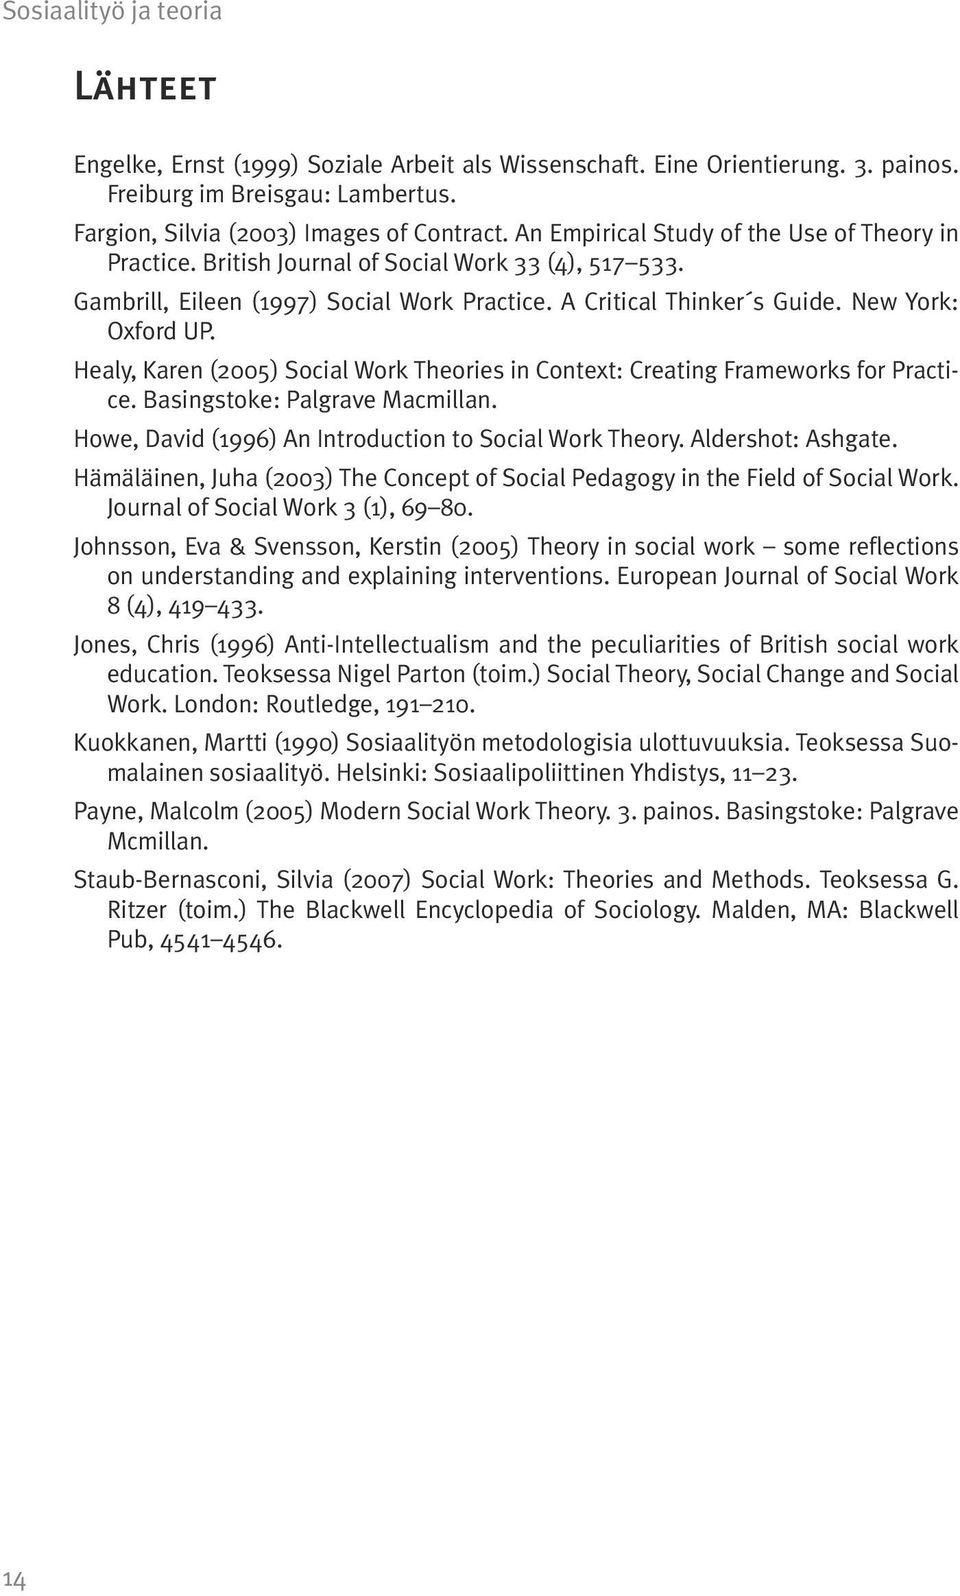 Healy, Karen (2005) Social Work Theories in Context: Creating Frameworks for Practice. Basingstoke: Palgrave Macmillan. Howe, David (1996) An Introduction to Social Work Theory. Aldershot: Ashgate.